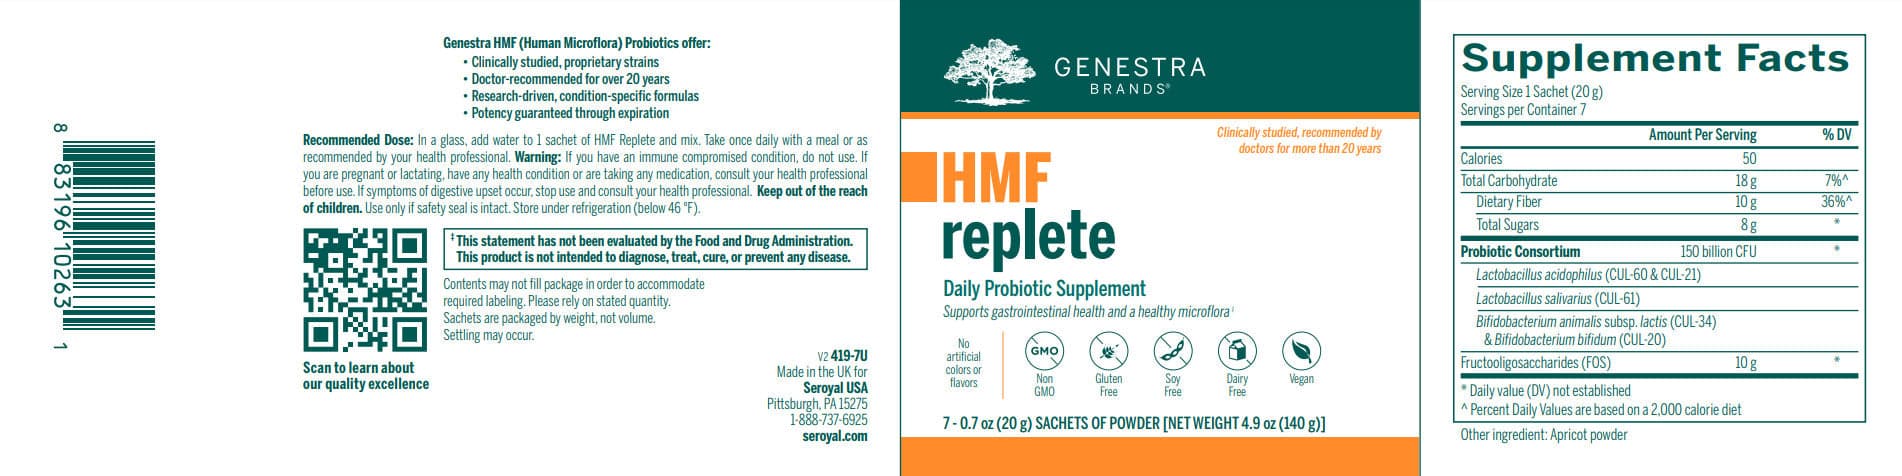 Genestra Brands HMF Replete Label